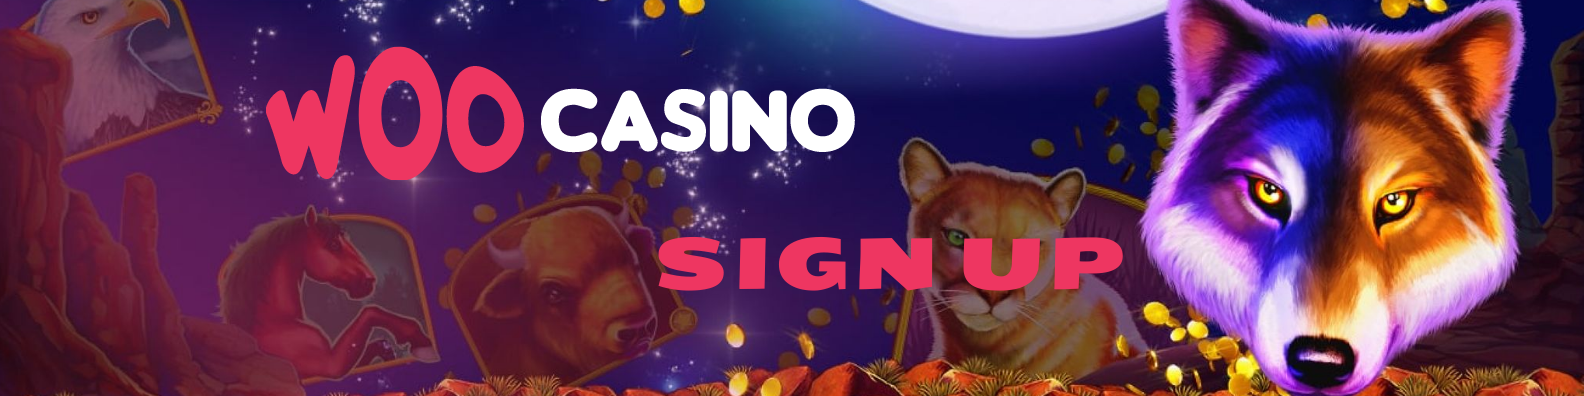 Woo Casino Sign Up